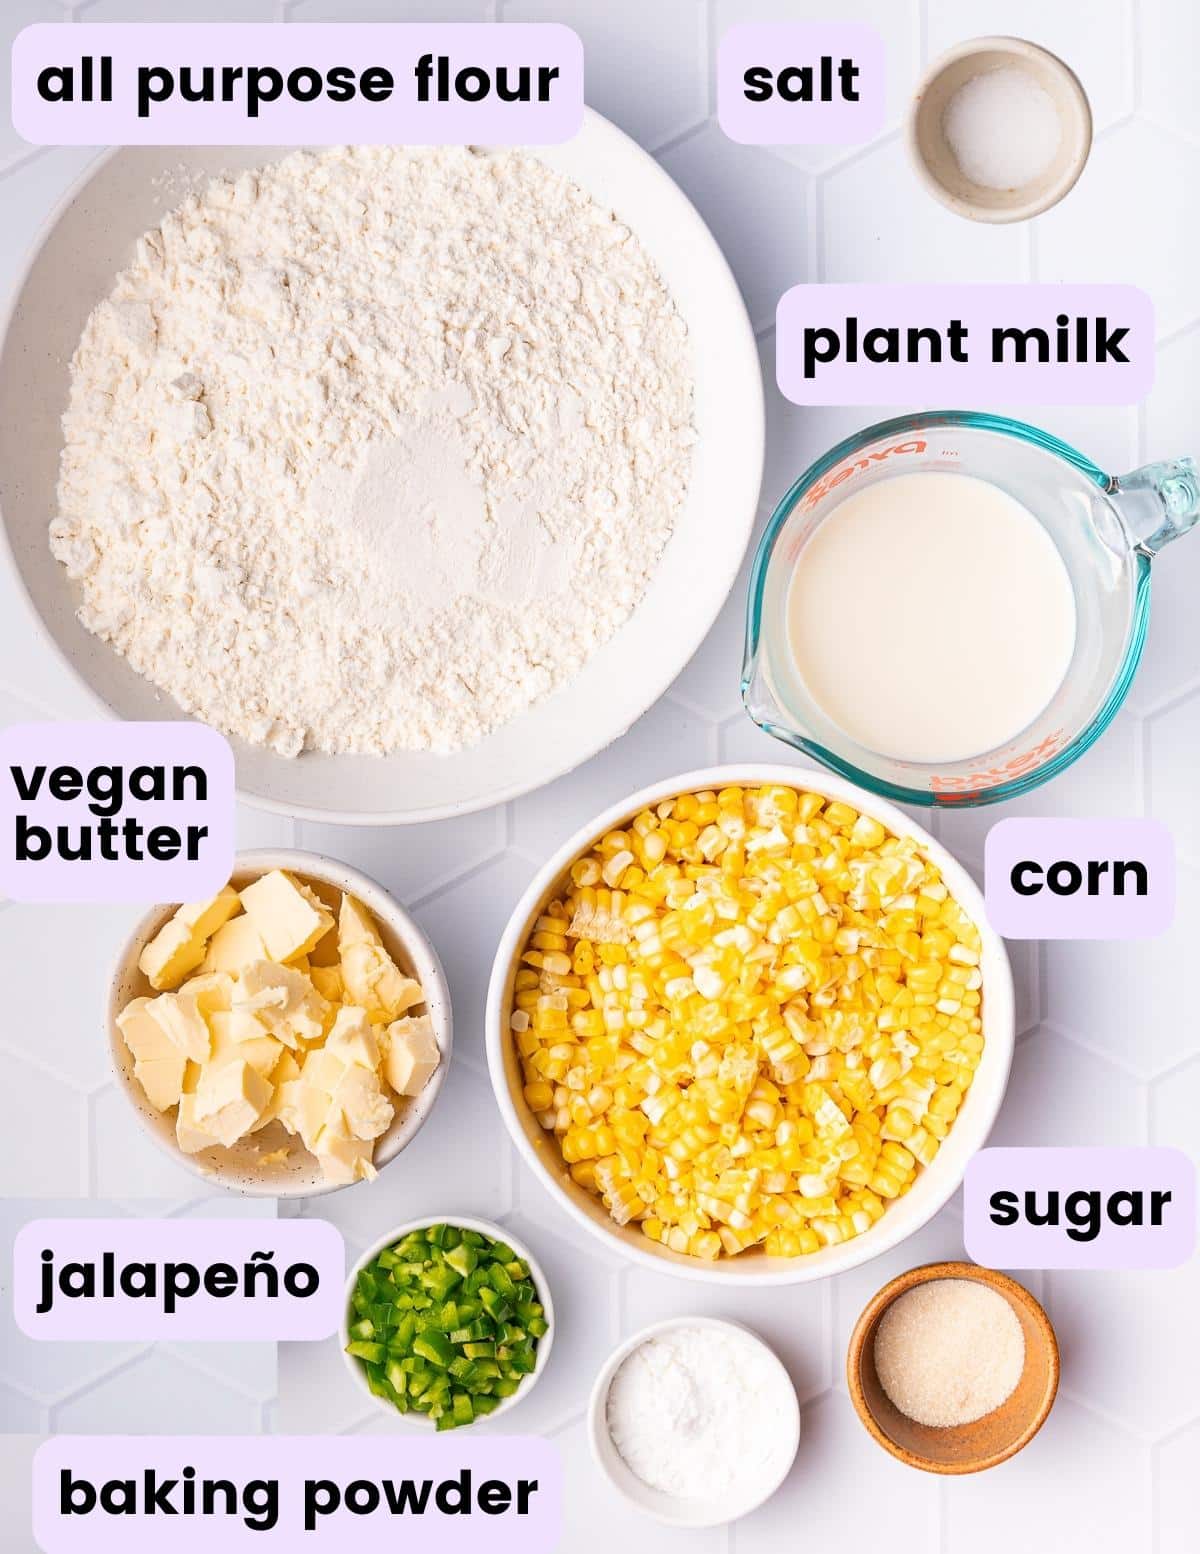 flour, salt, plant milk, vegan butter, corn, jalapeno, baking powder, sugar